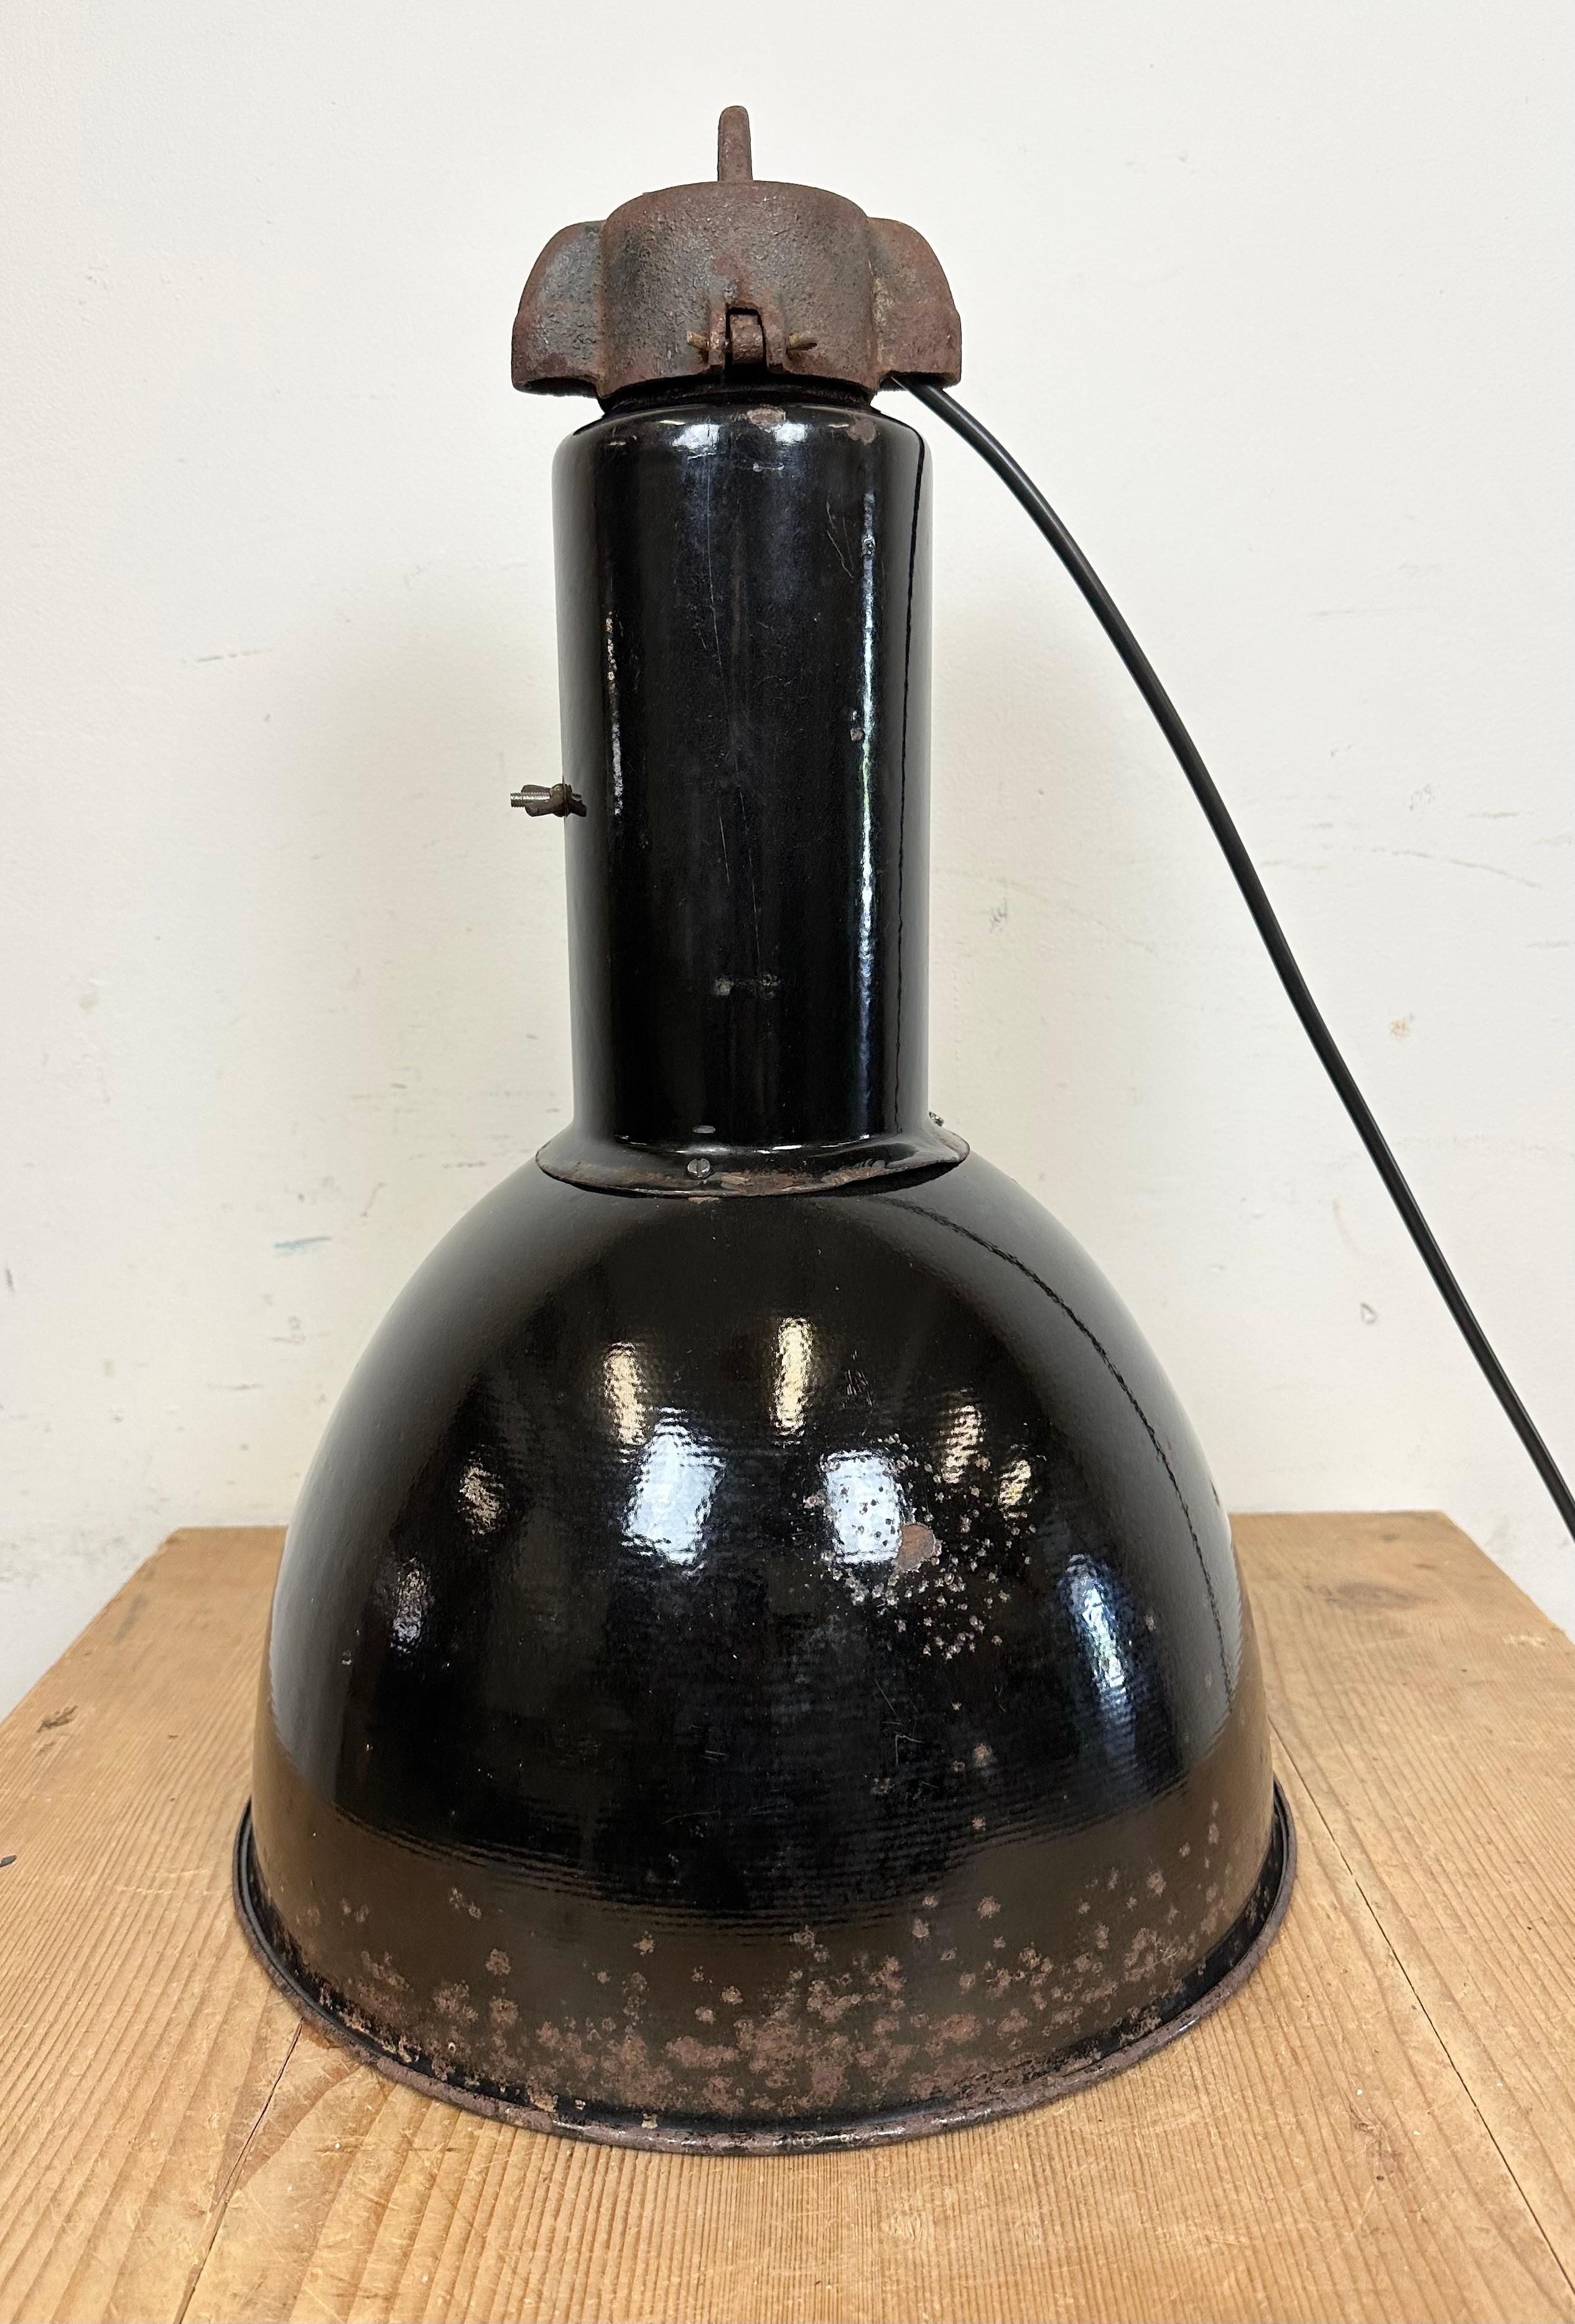 Rusty Industrial Bauhaus Black Enamel Pendant Lamp, 1930s For Sale 6